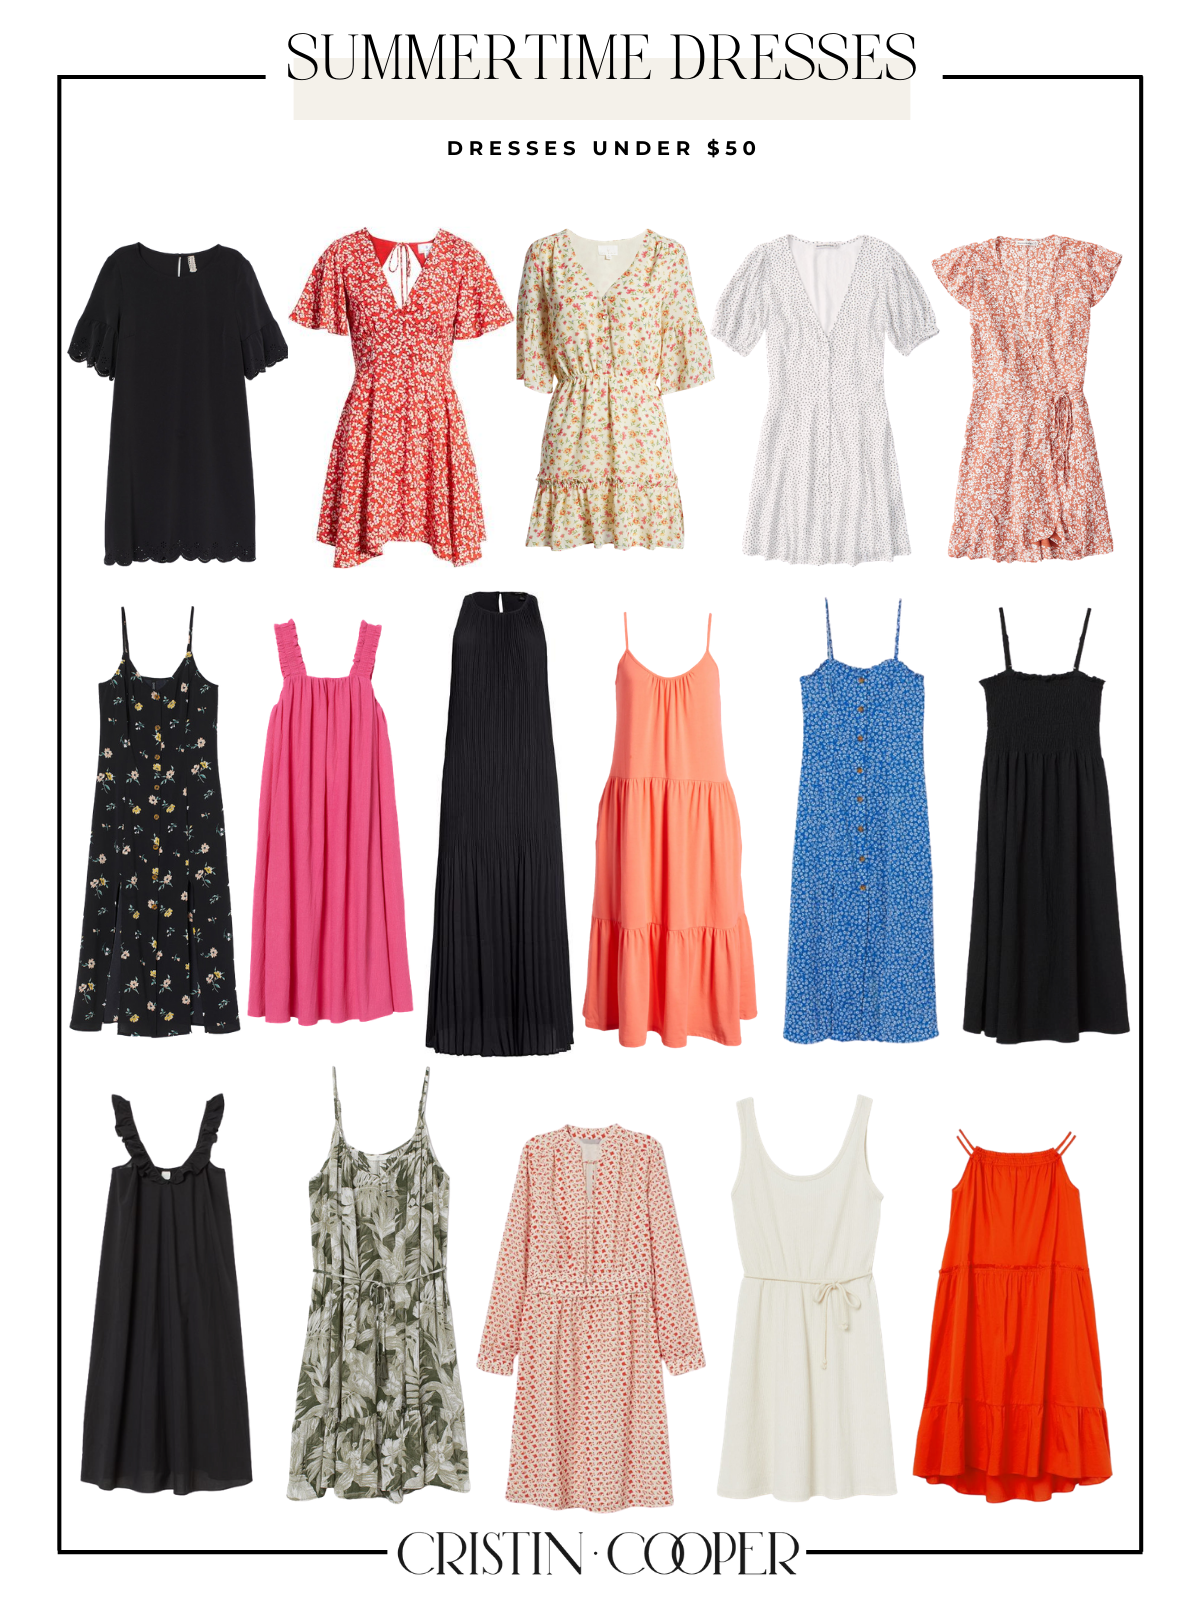 Summer Dresses under $50